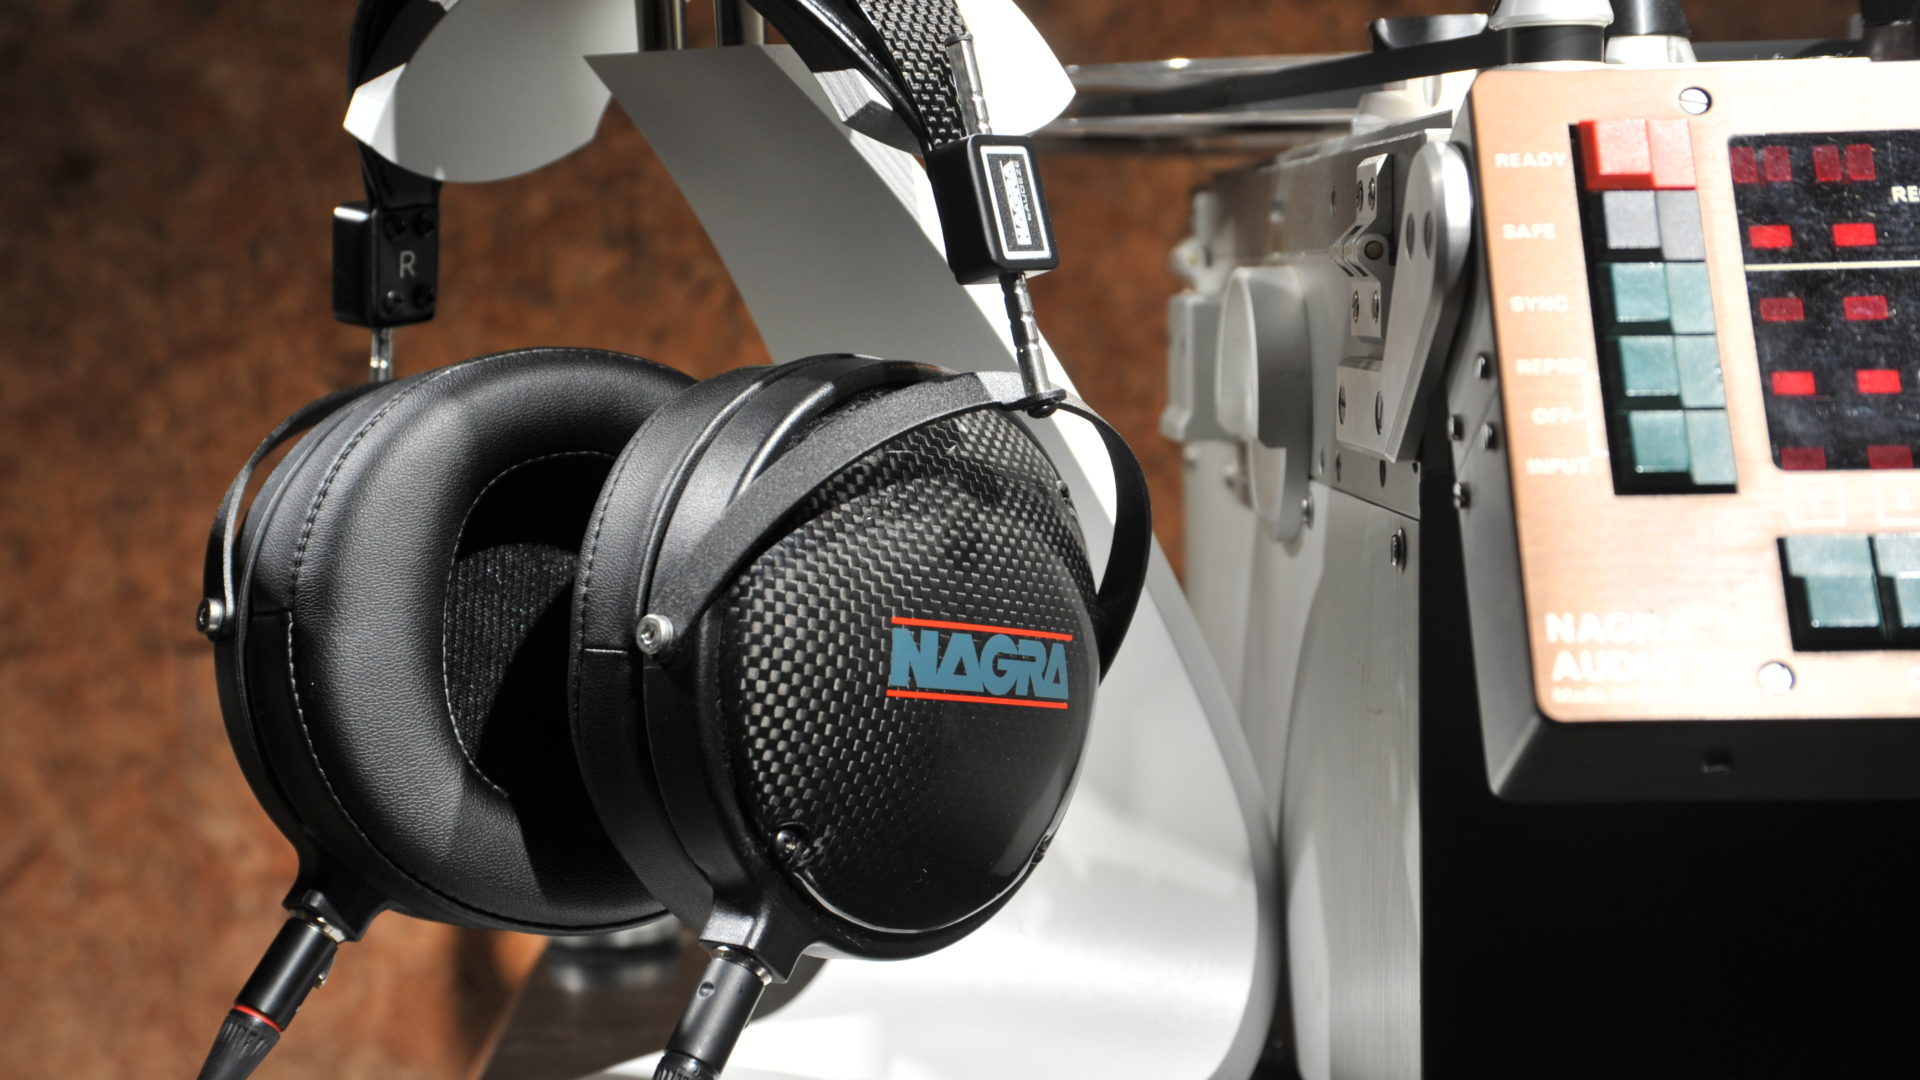 Nagra-monitoring-headphone-TA-1920x1080